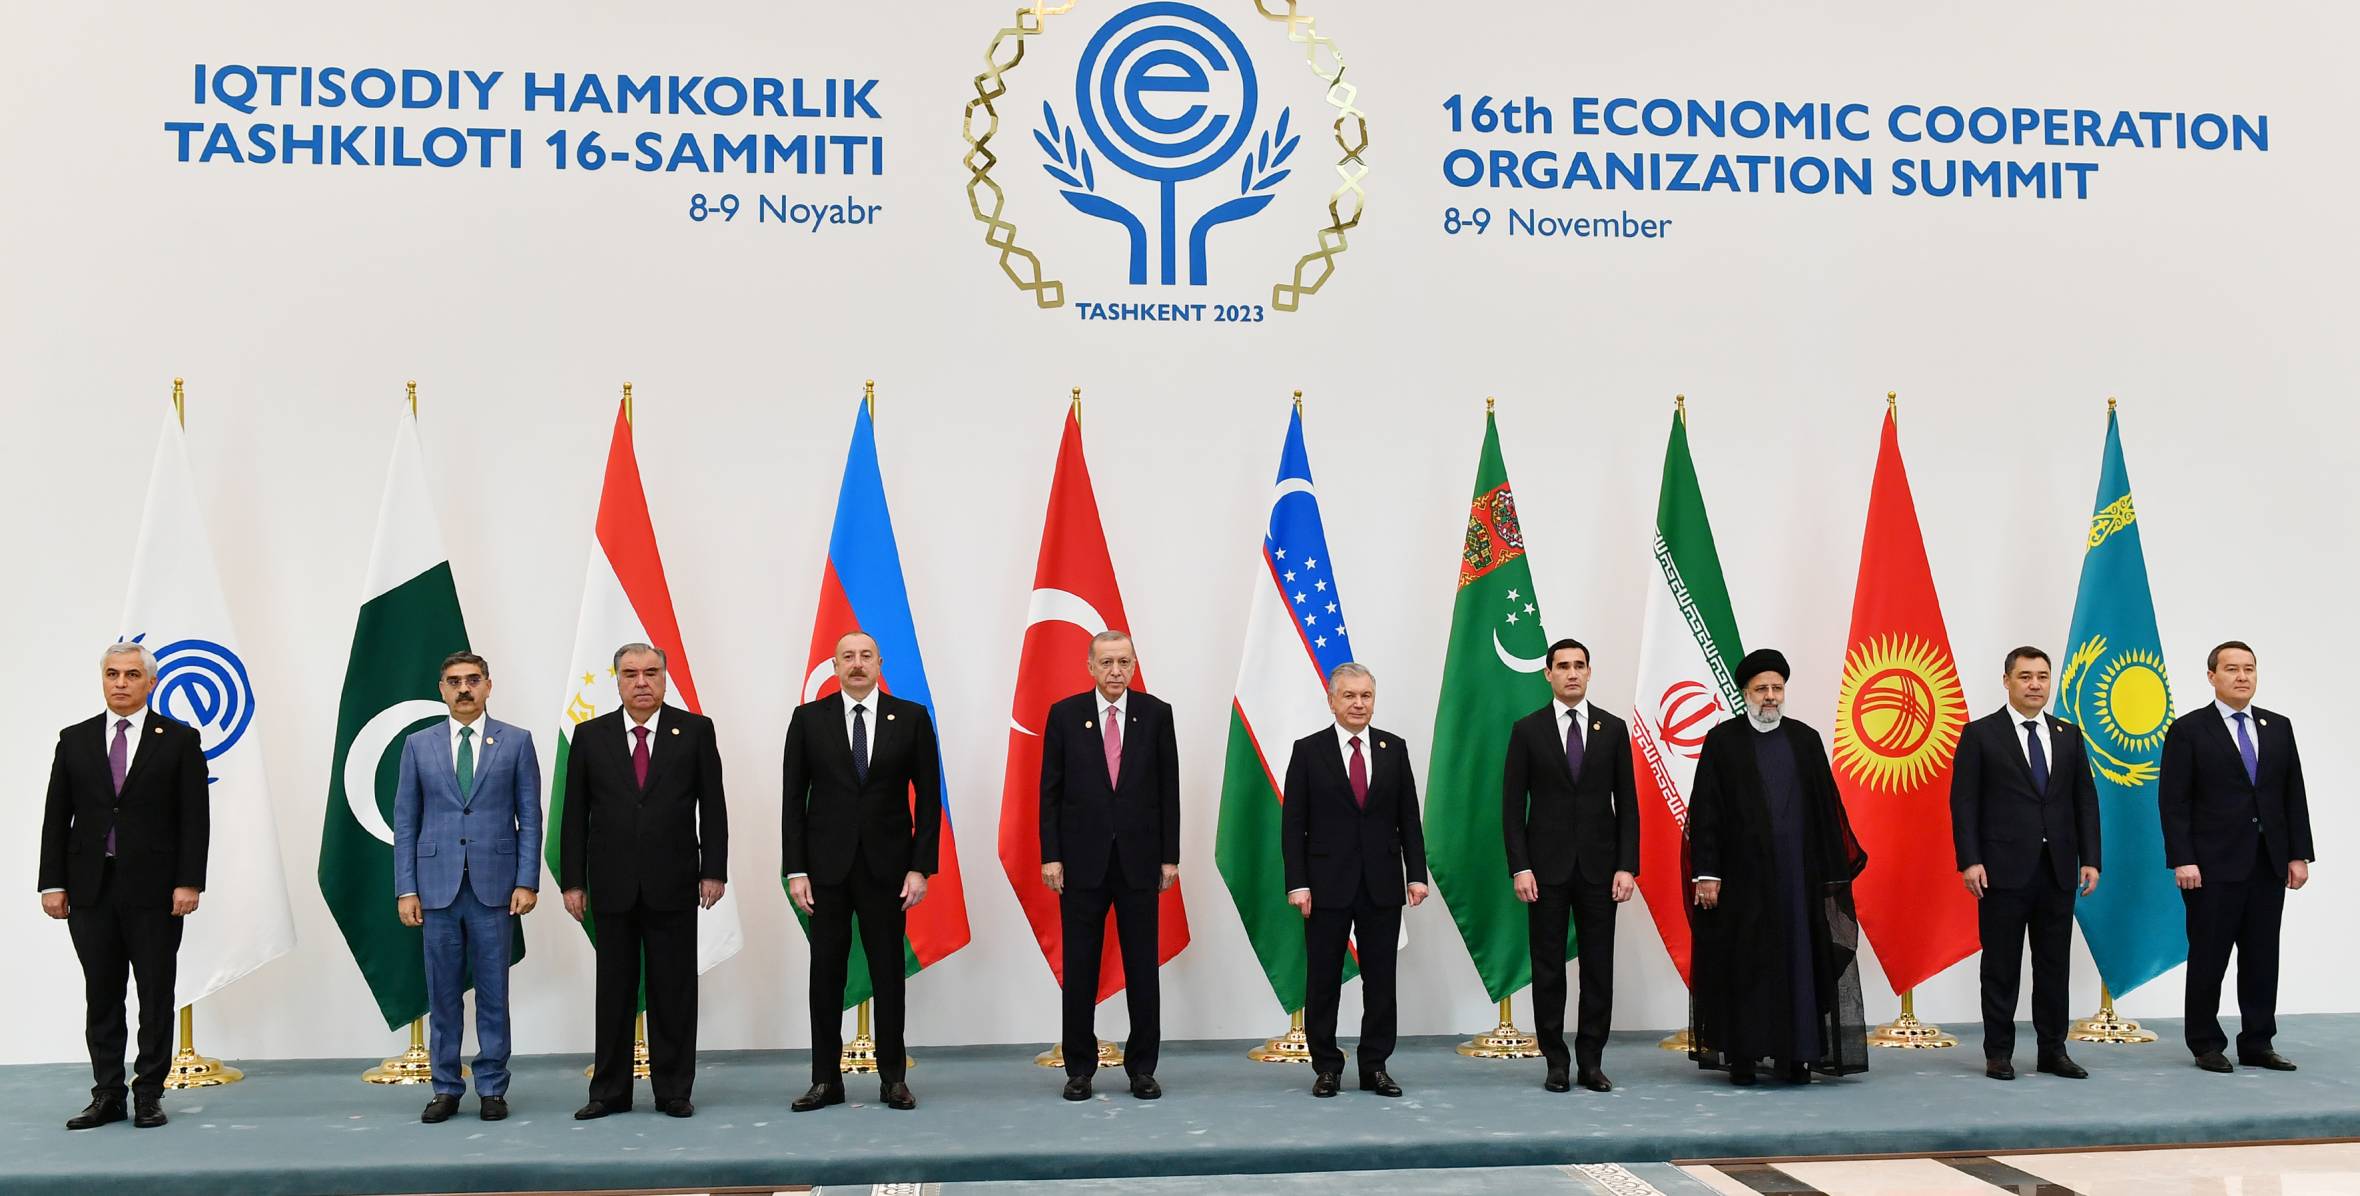 16th Summit of Economic Cooperation Organization gets underway in Tashkent